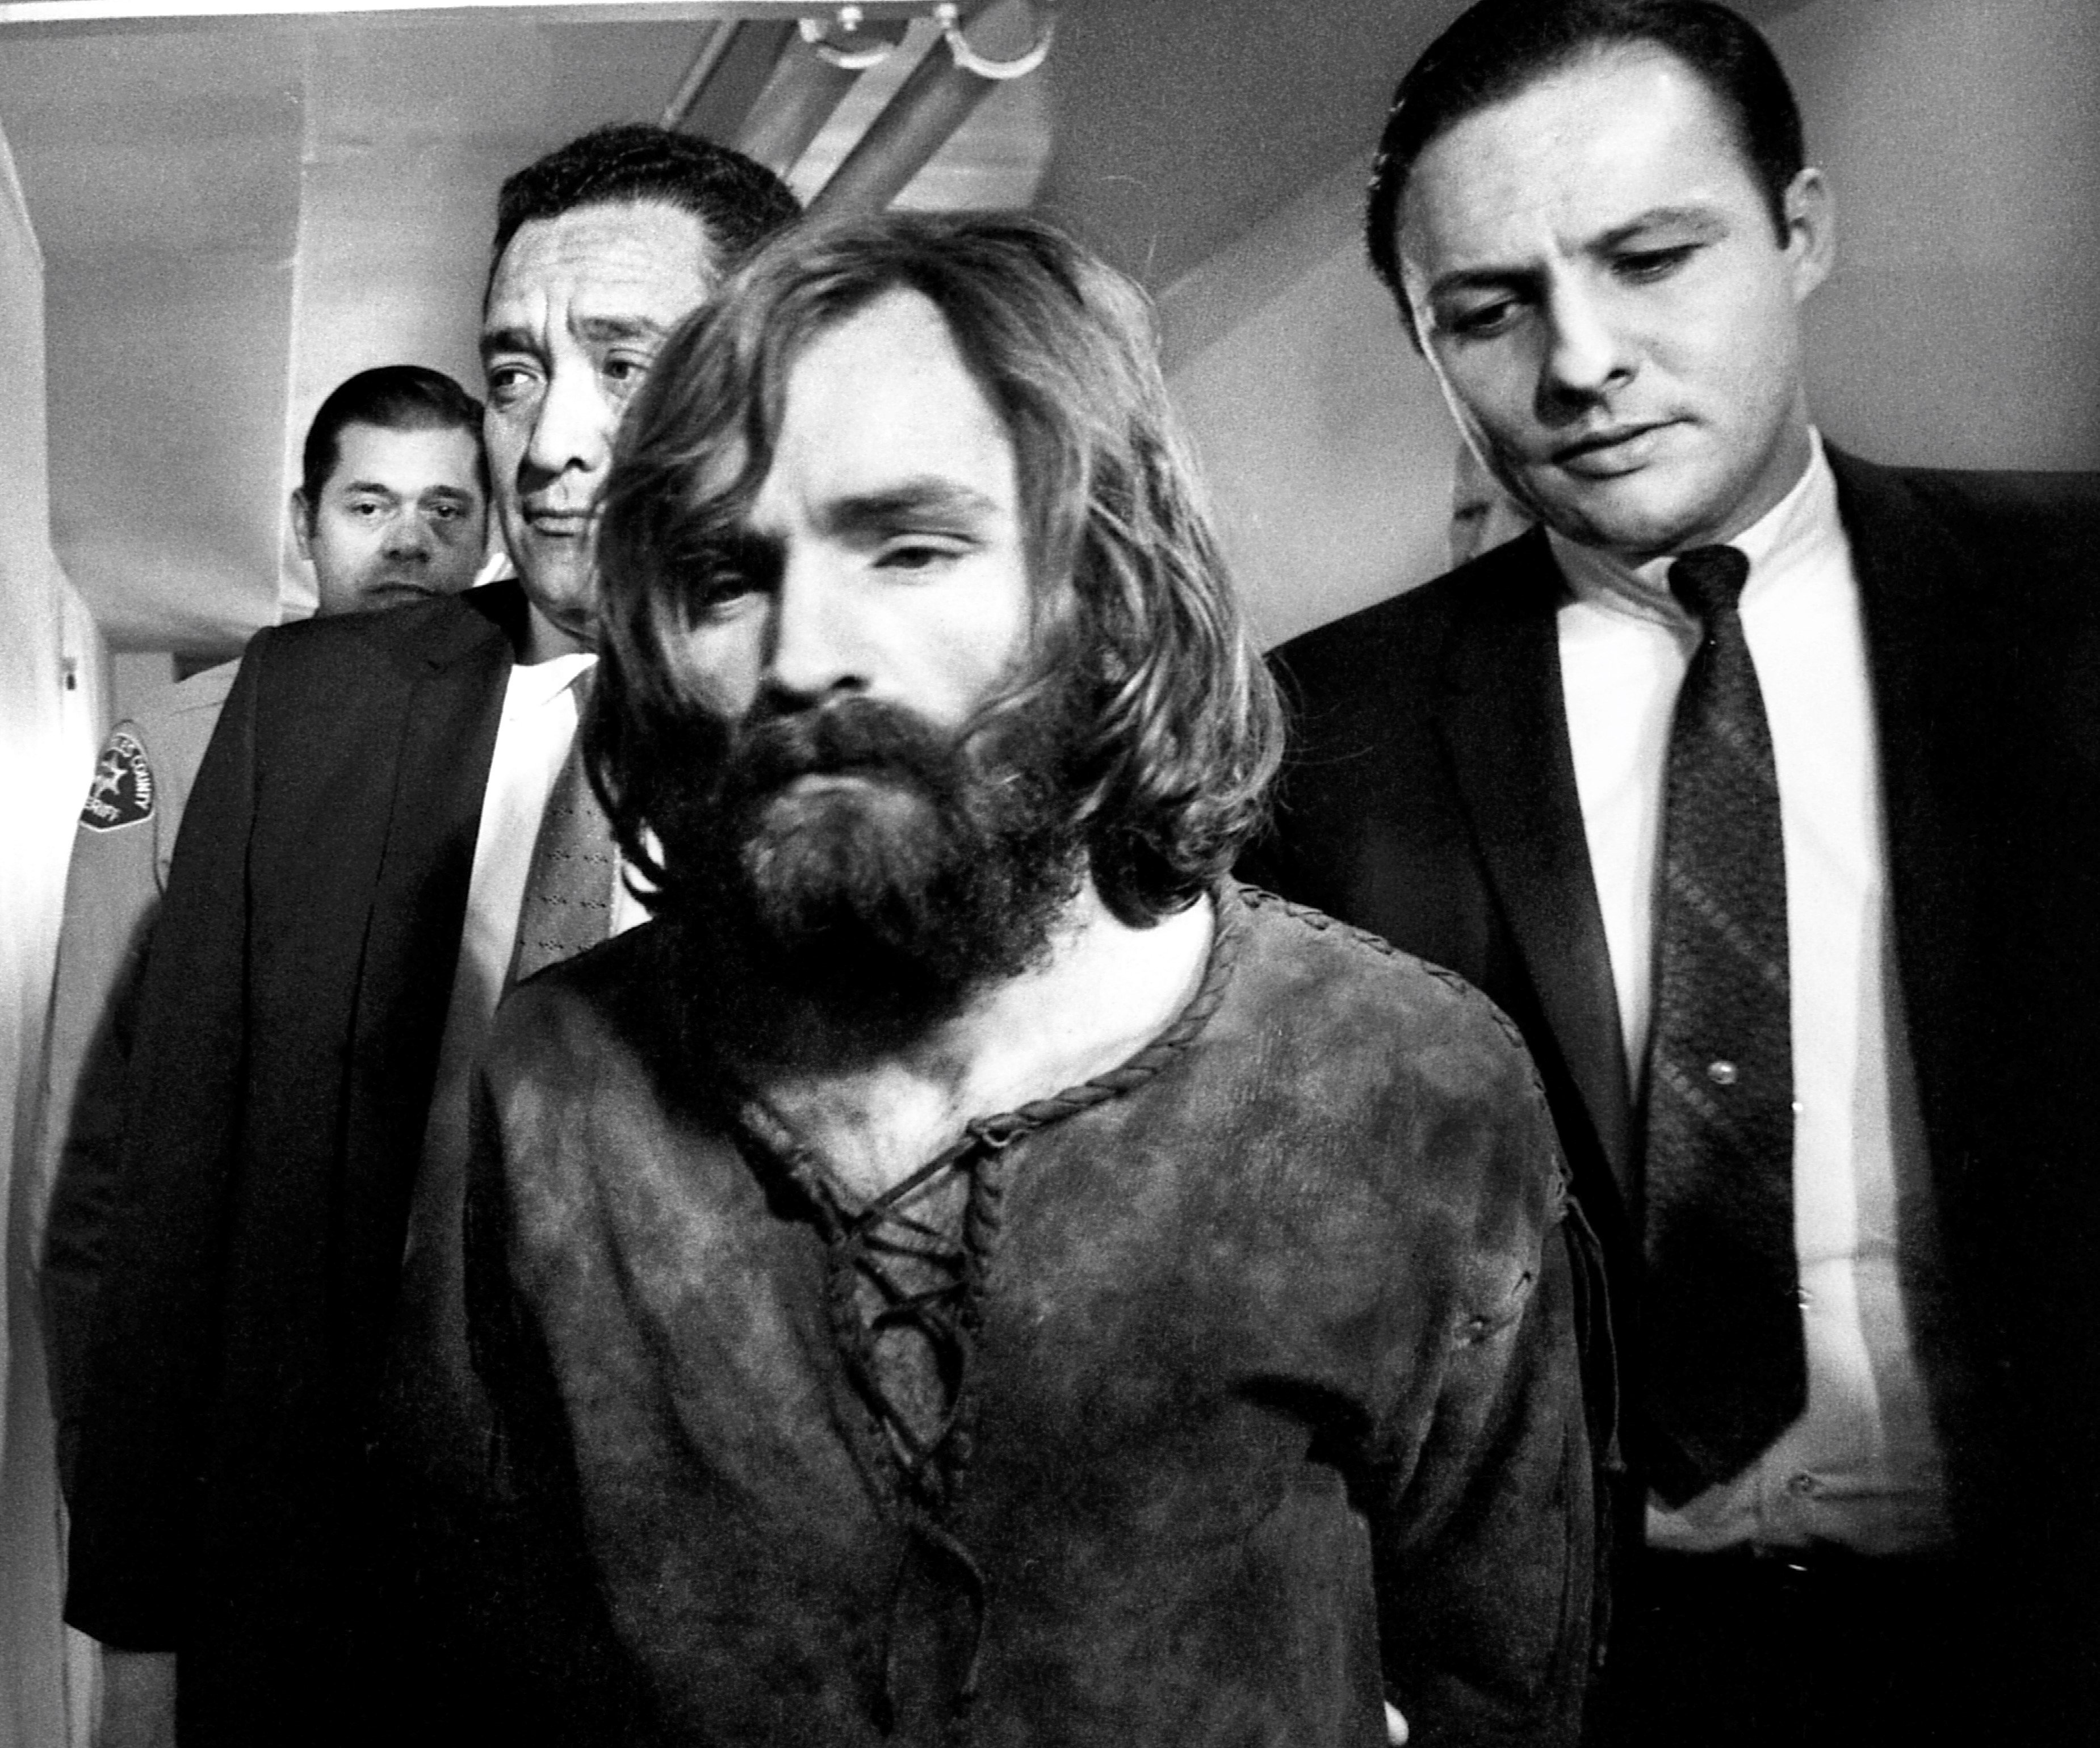 Charles Manson next to three men